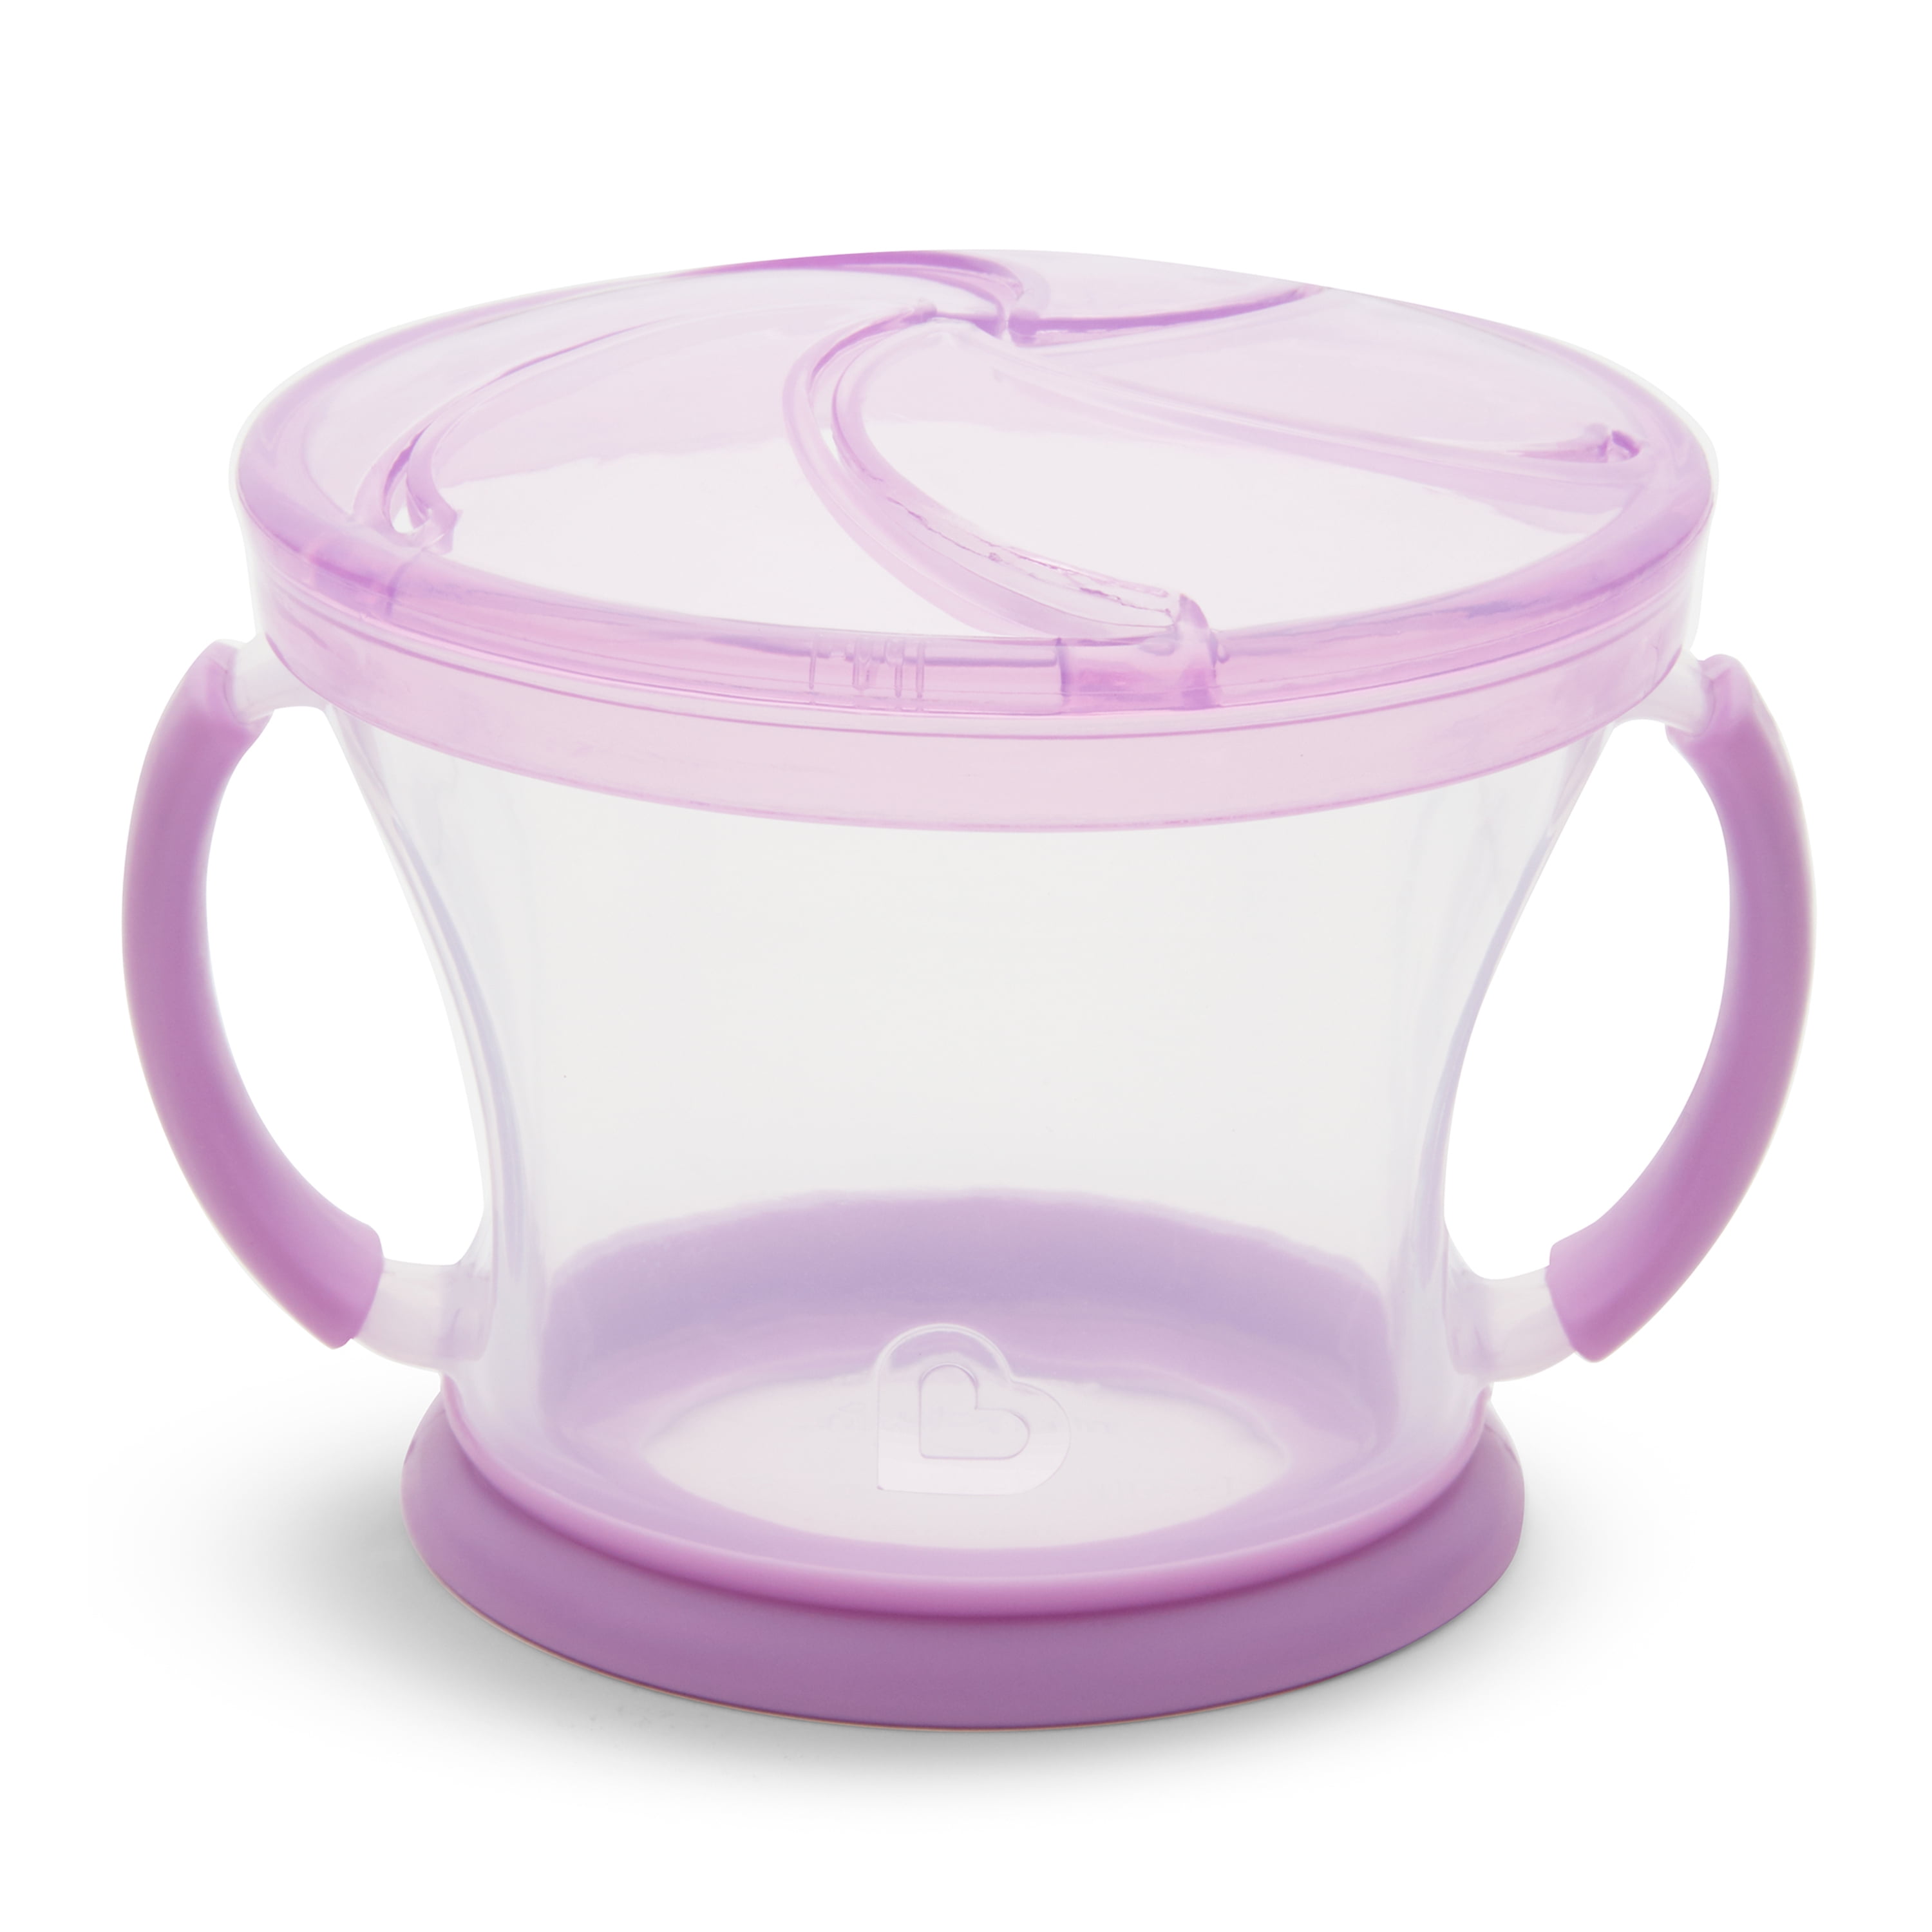 MamaCup Snack Cup (purple) - Trendyol